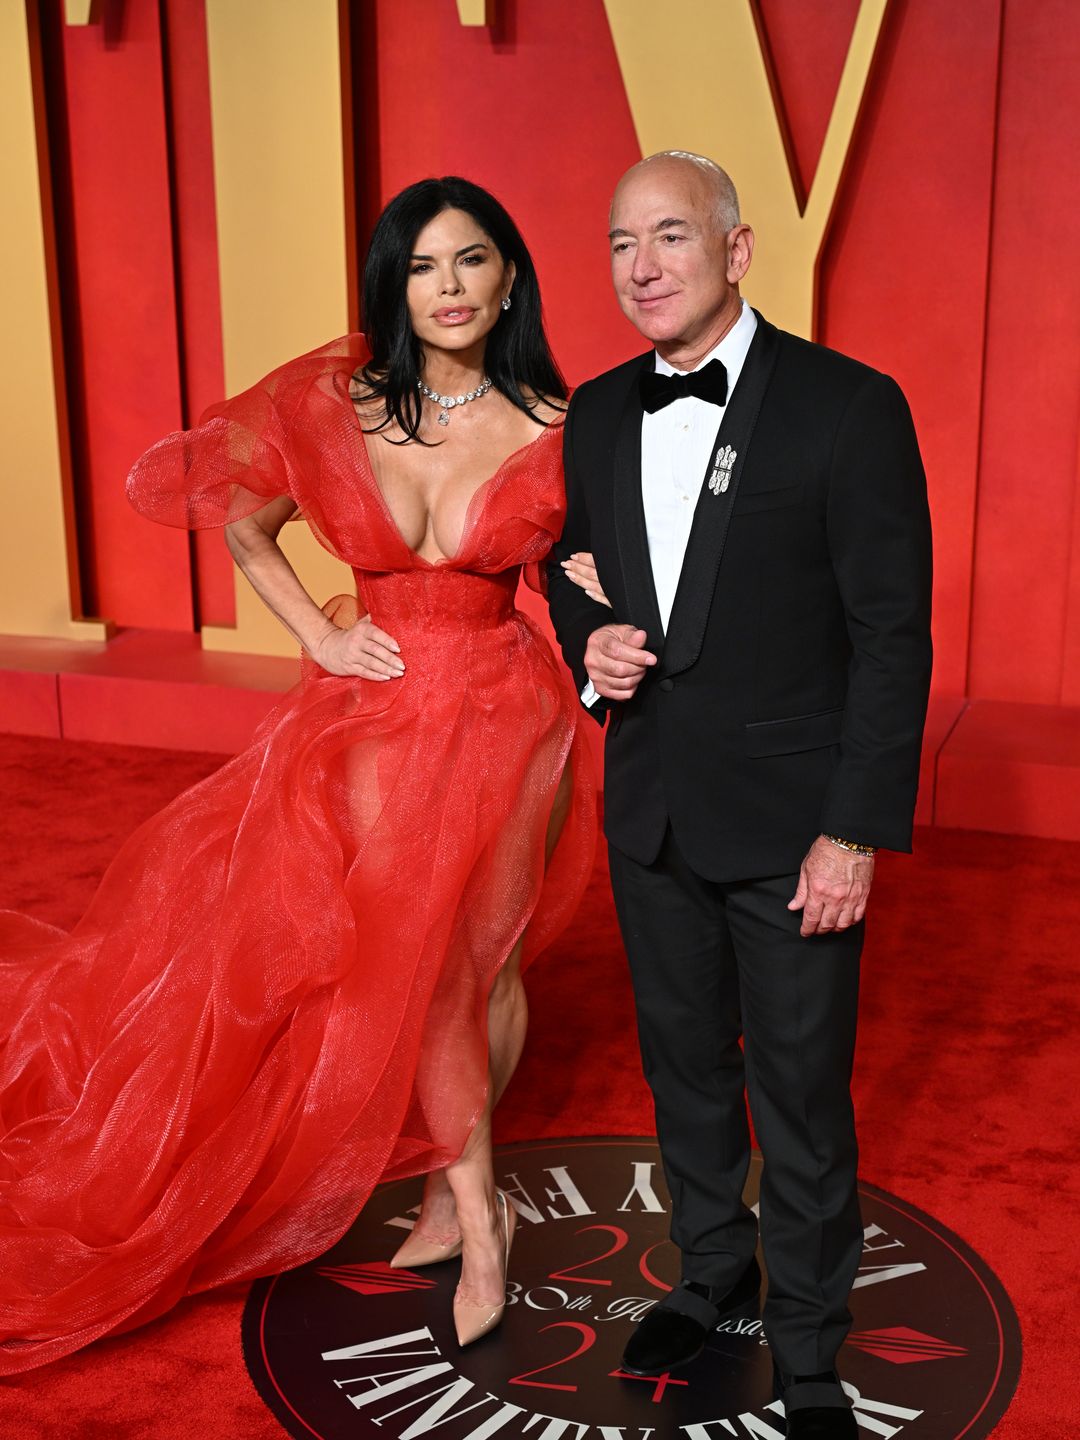 Lauren Sanchez and Jeff Bezos attending the Vanity Fair Oscar Party 